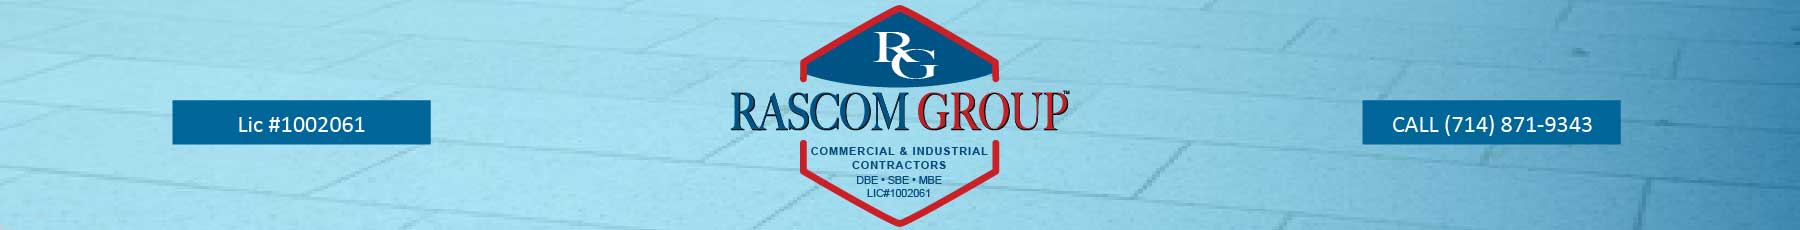 Rascom Group